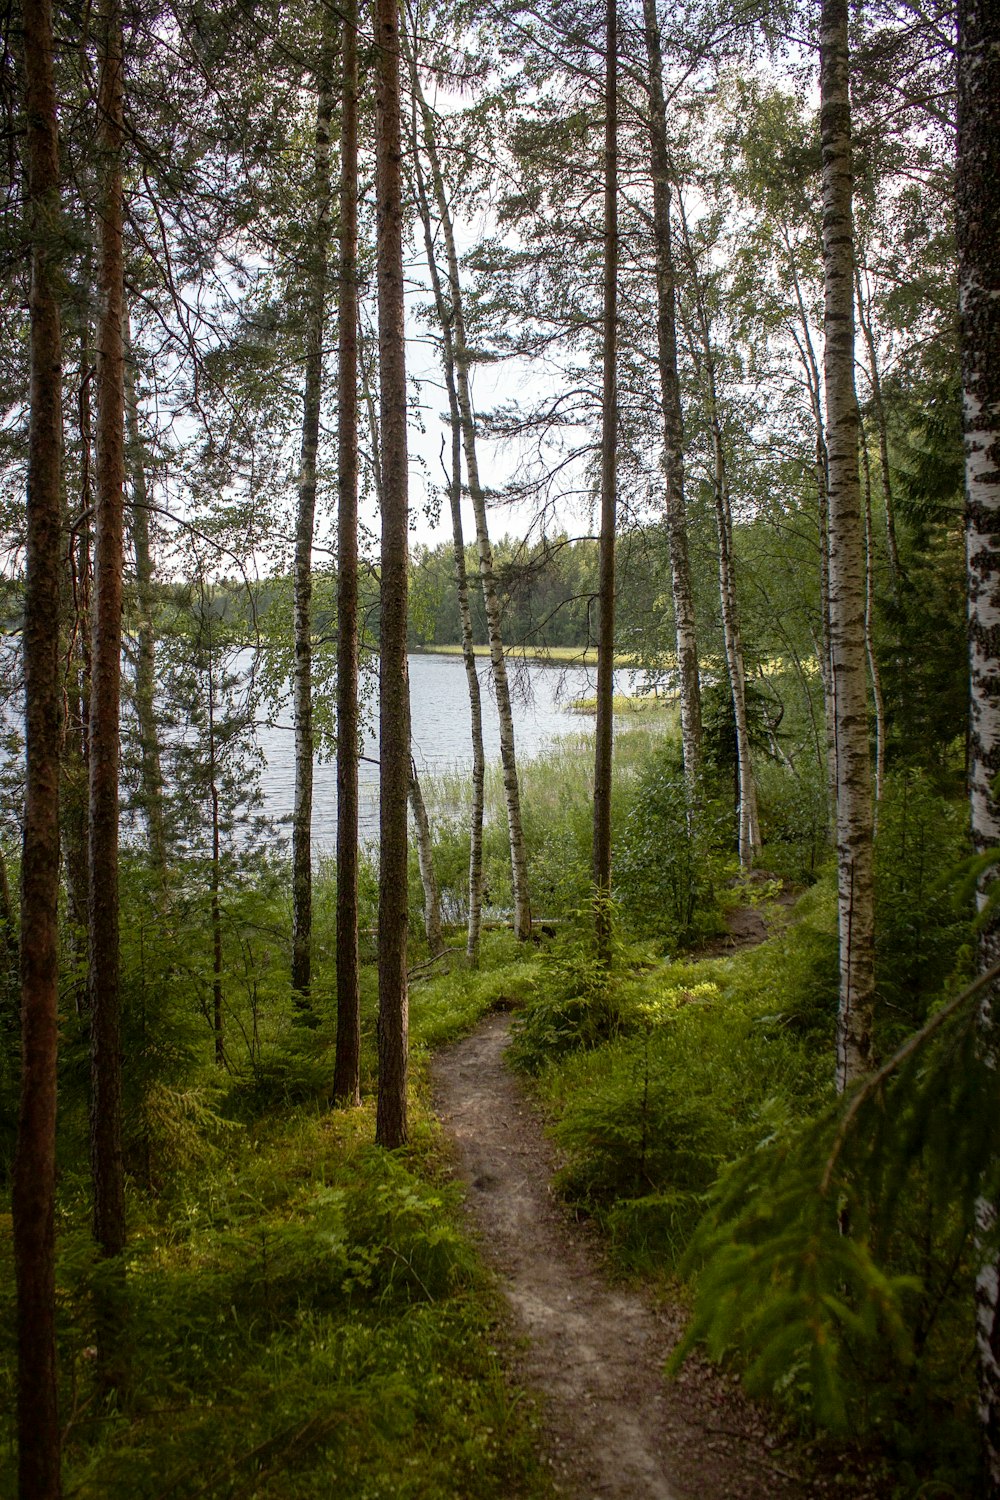 Sentiers de terre bordés d’arbres menant au lac